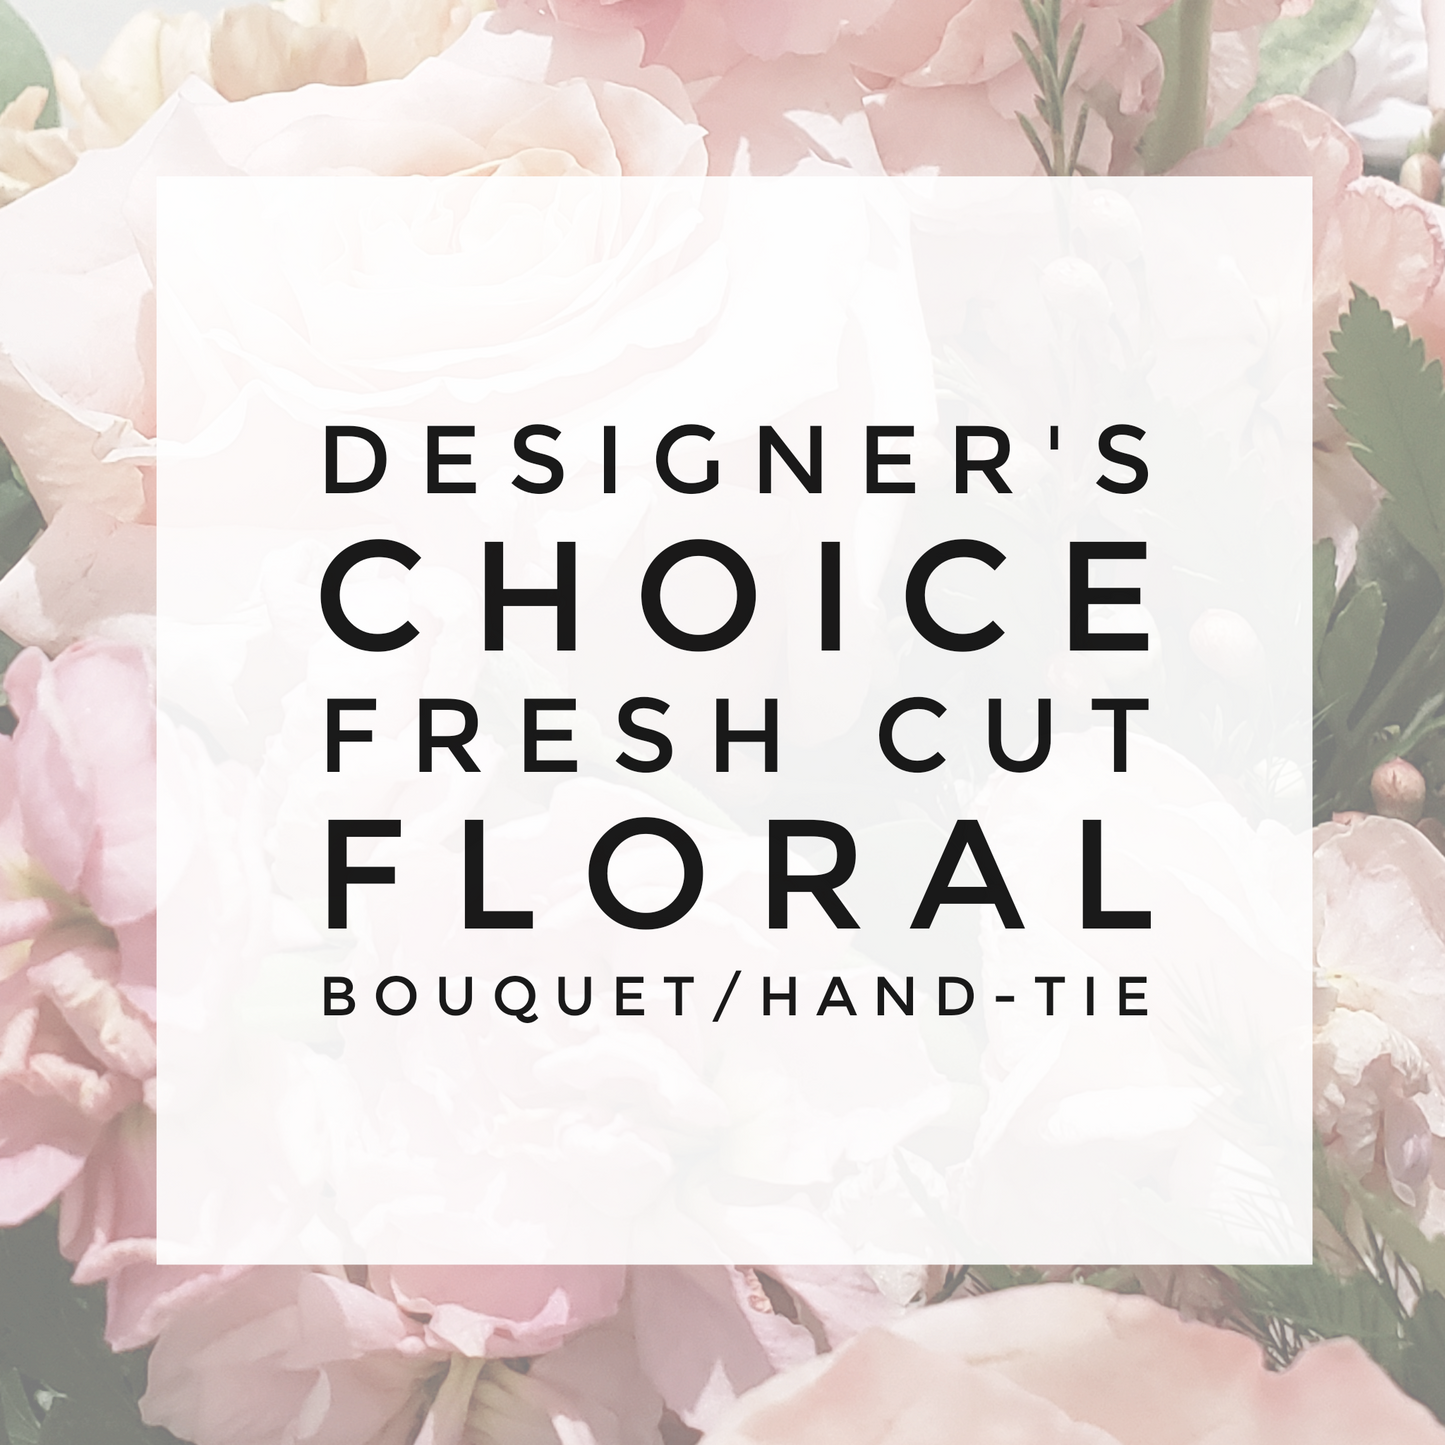 Designer's Choice Fresh Cut Floral Bouquet/Hand-Tie